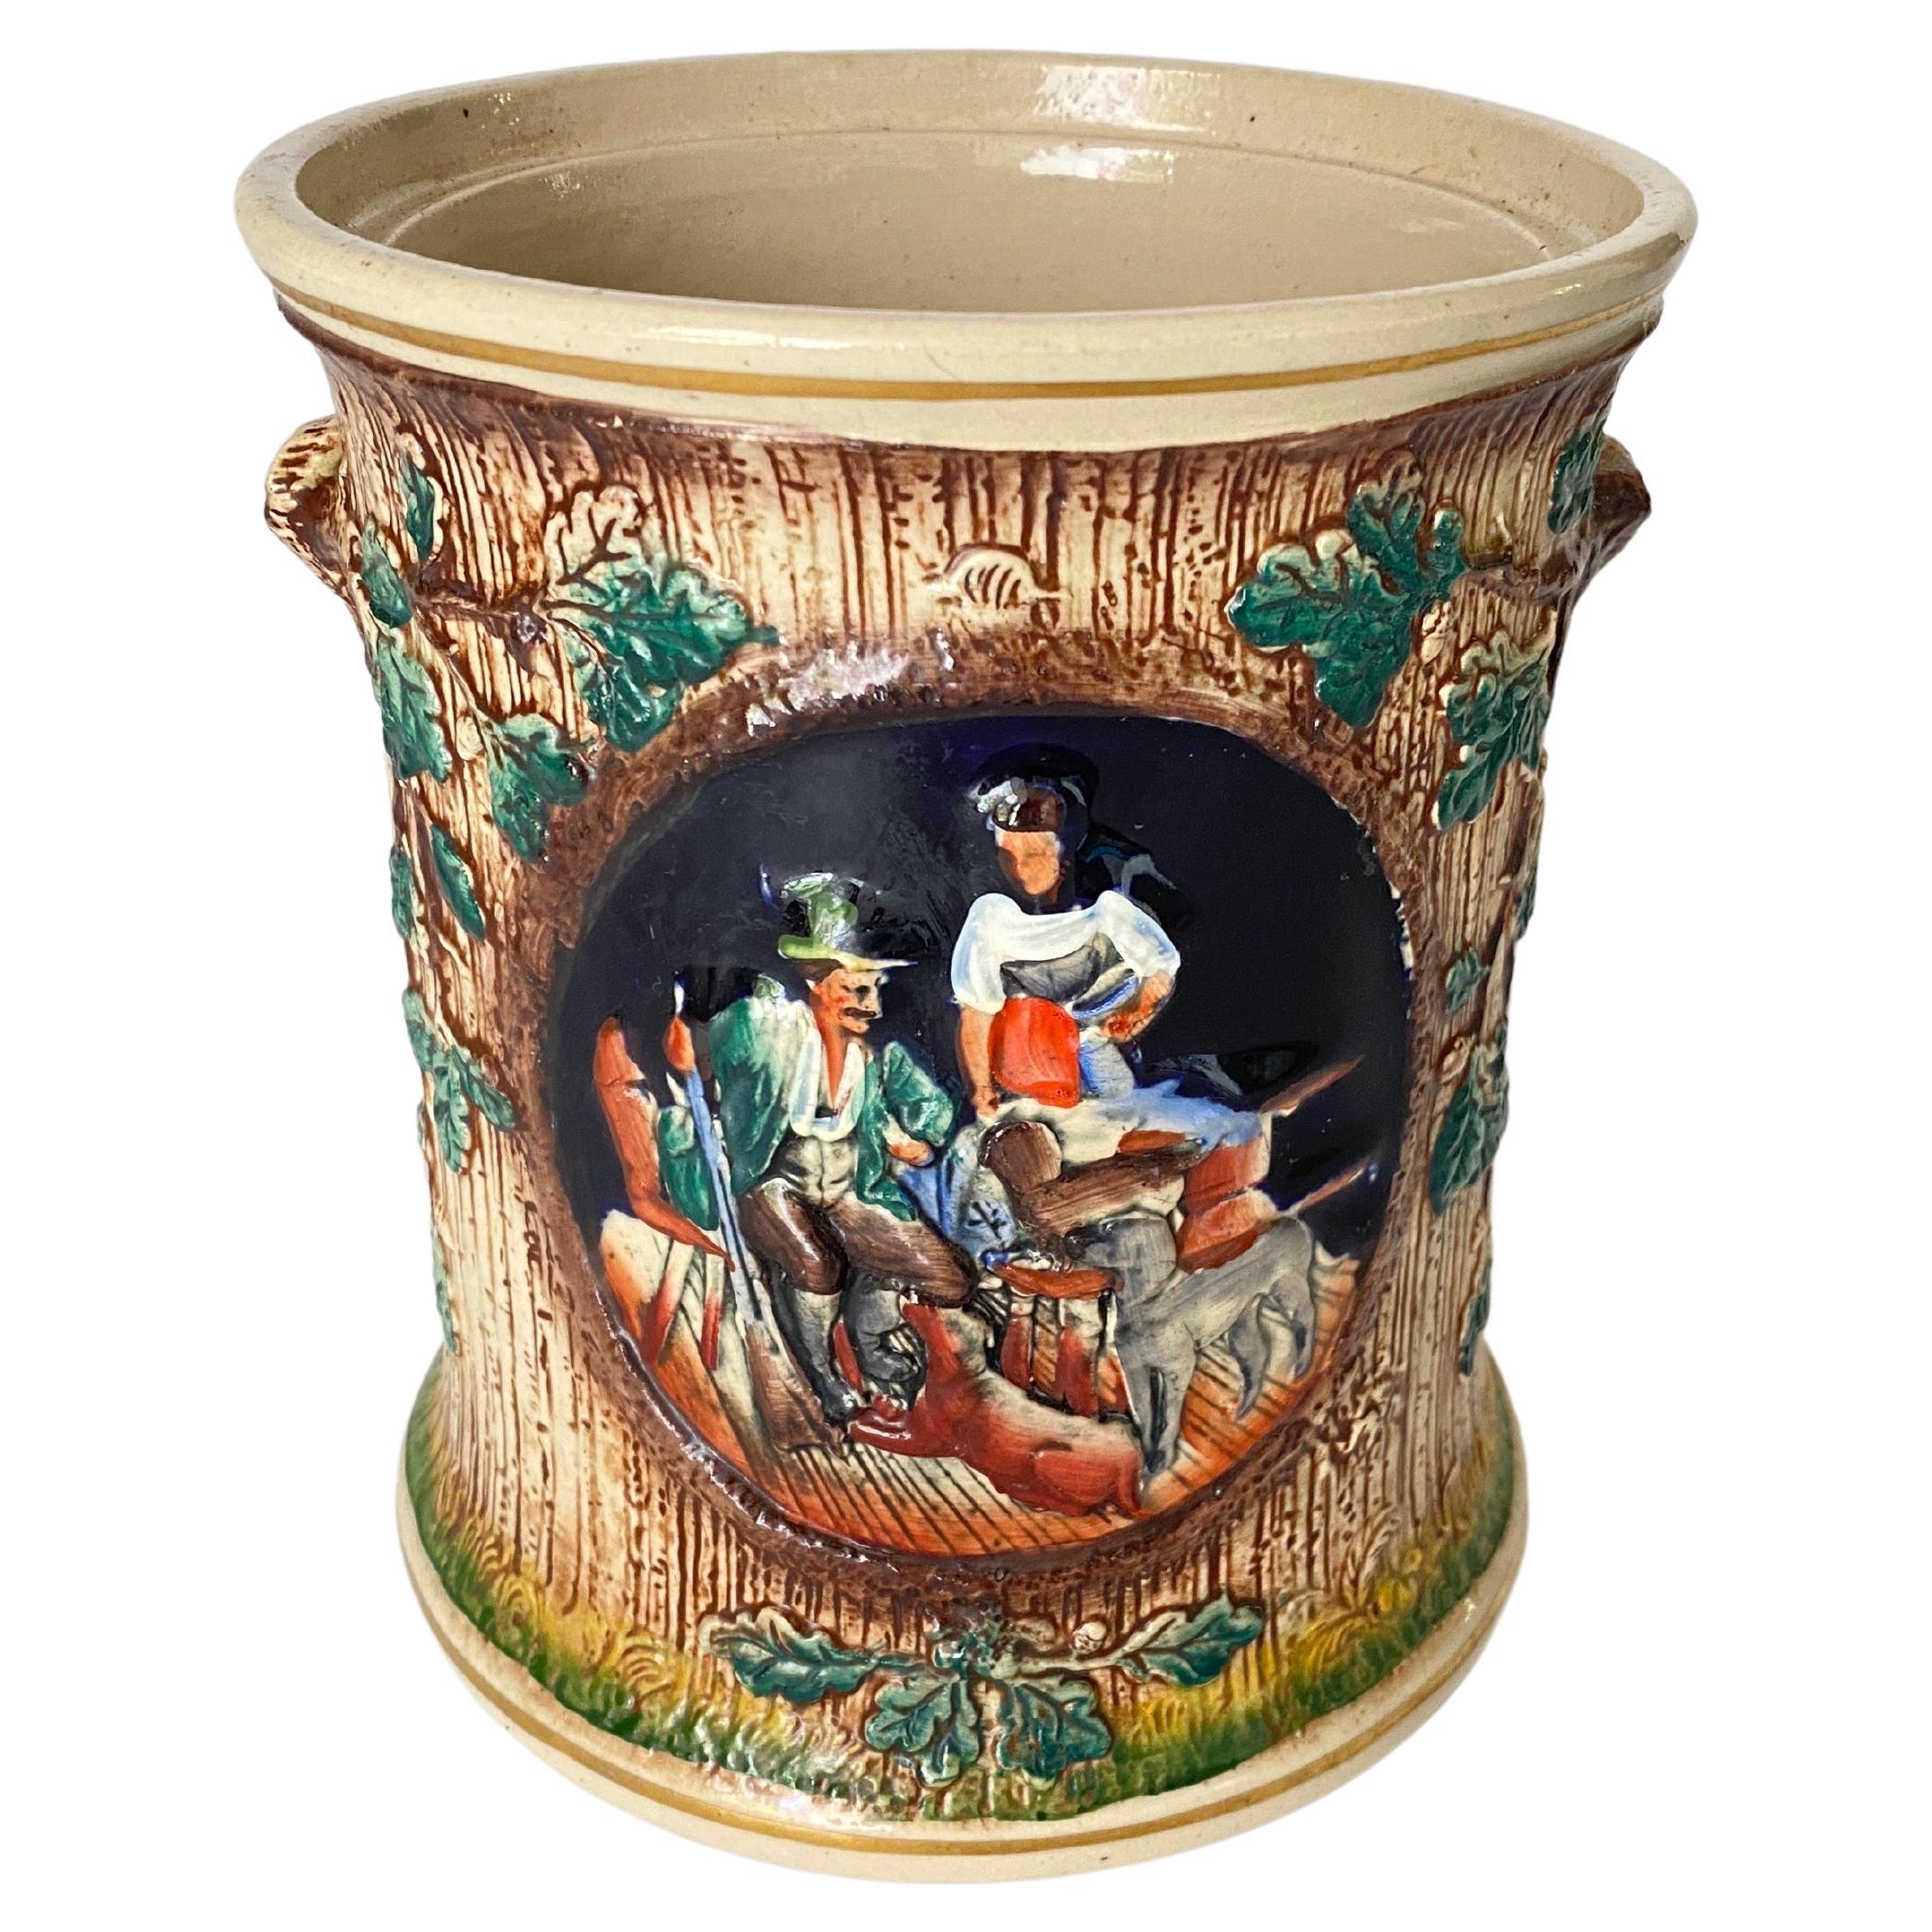  Töpfer- oder Schachtel aus Majolika aus Gremany-Keramik, 19. Jahrhundert, Beigeblau